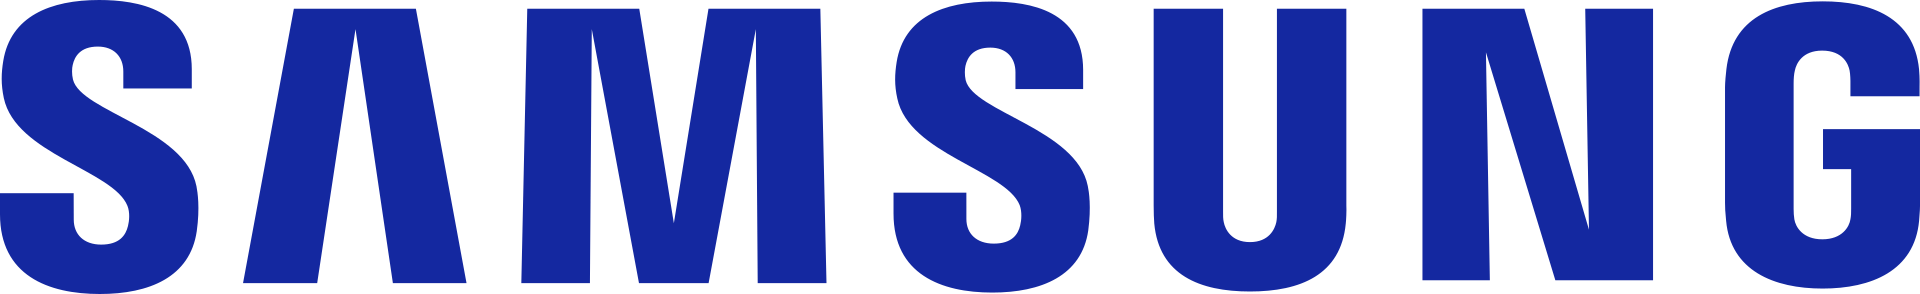 Samsung_Electronics_logo_(2015).png